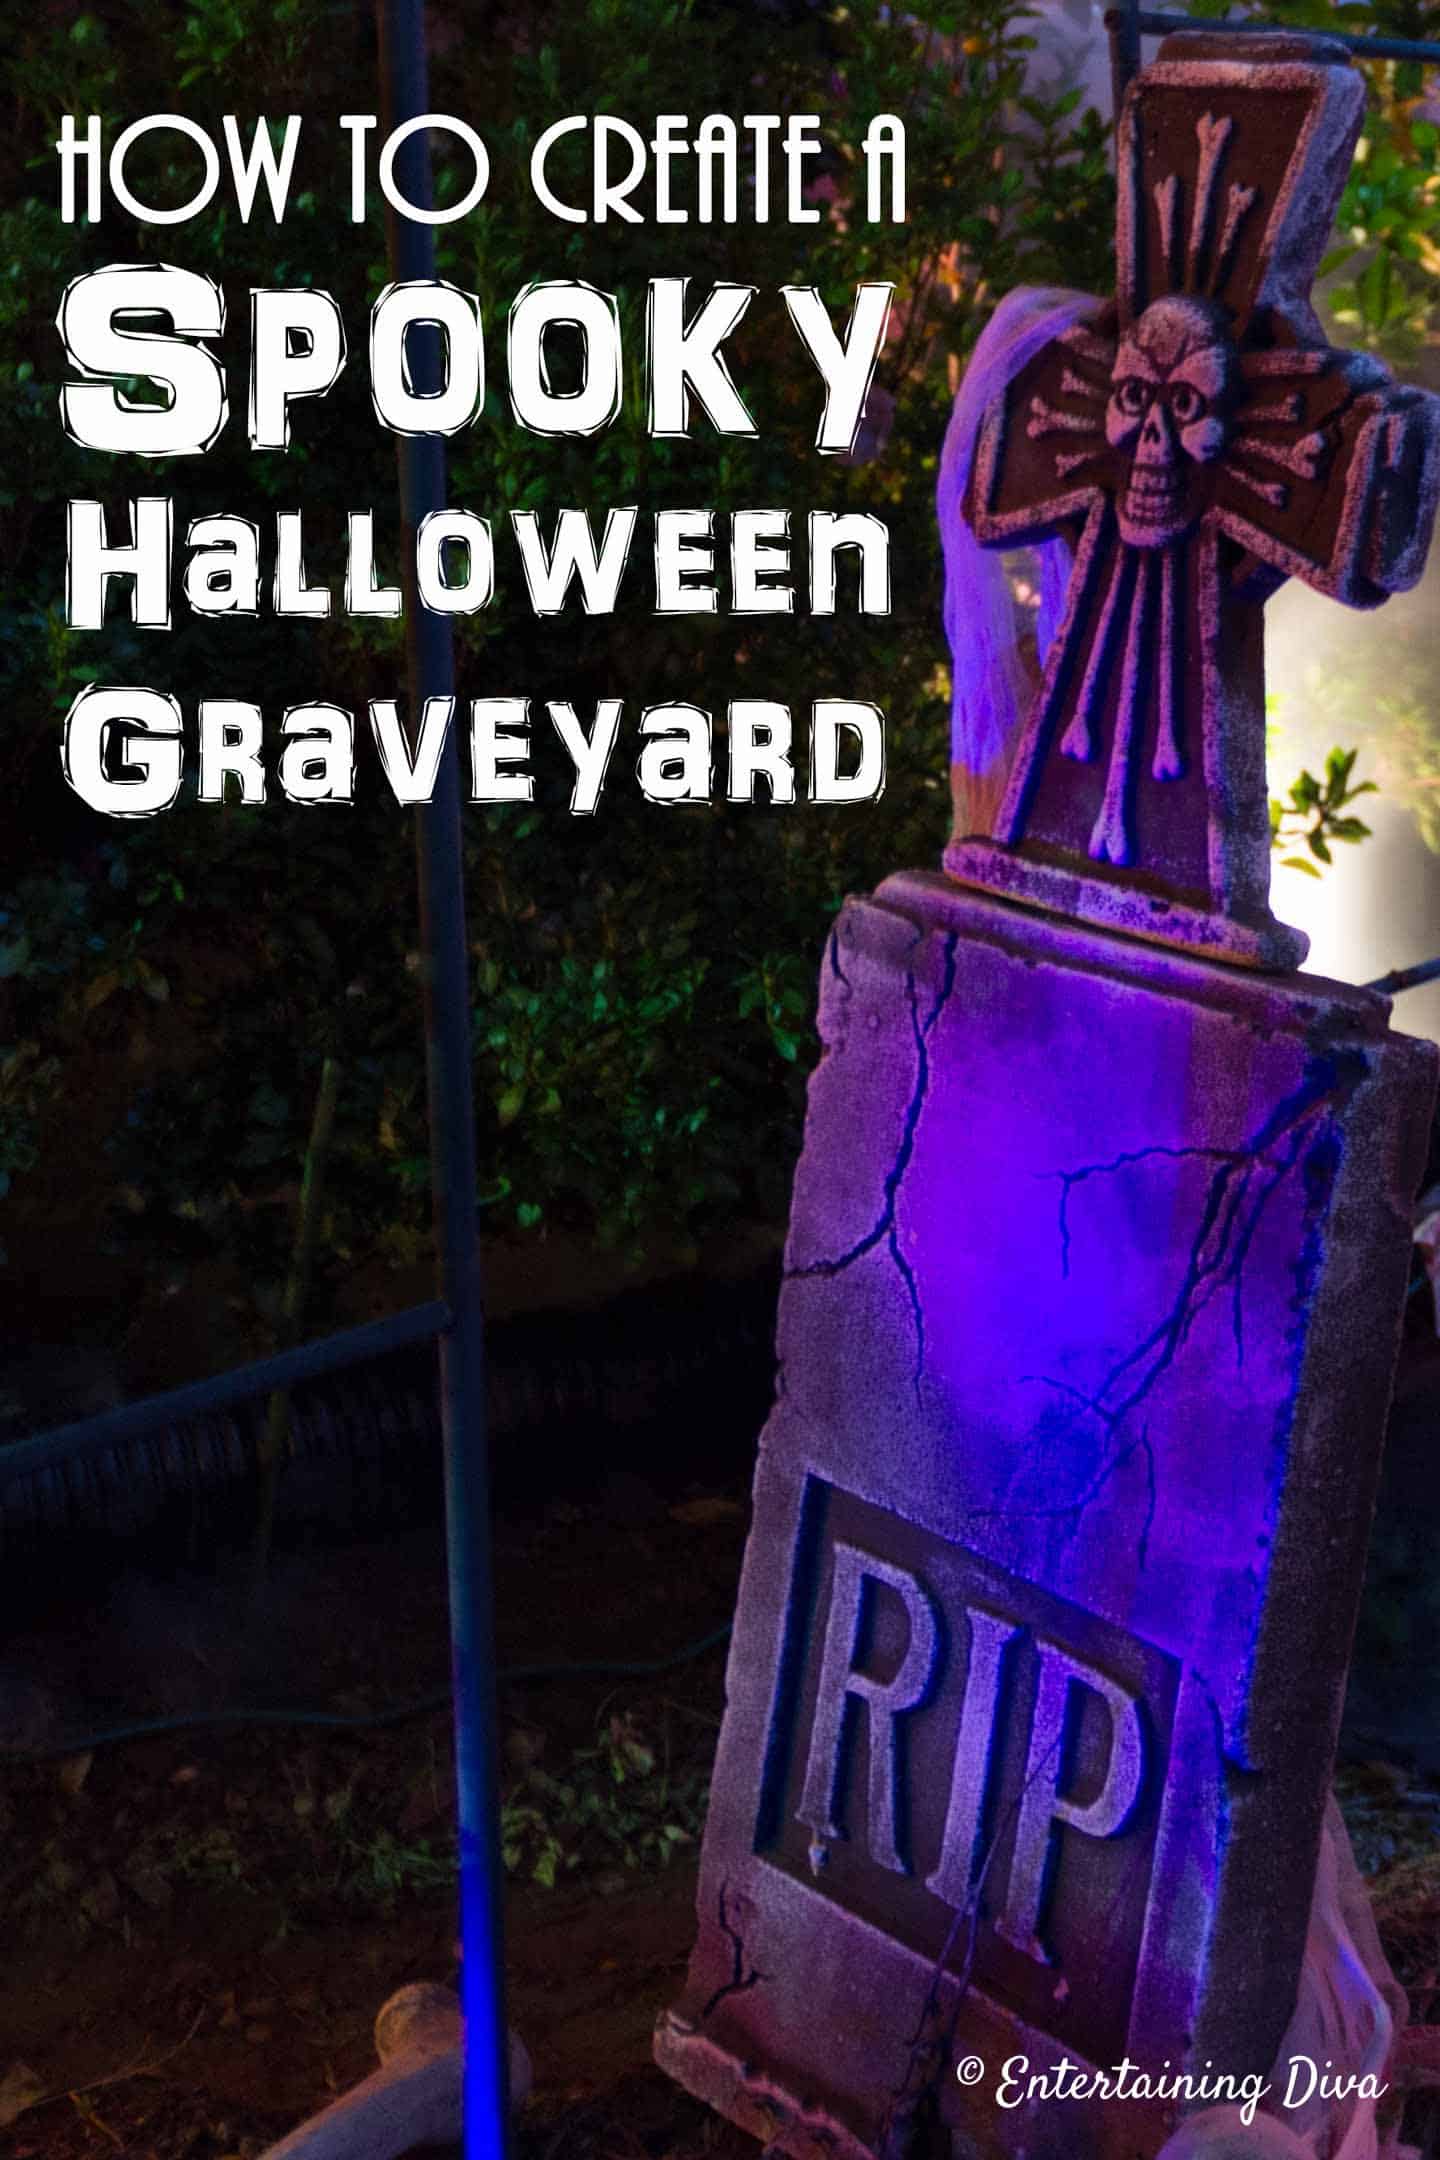 How to create a spooky Halloween graveyard